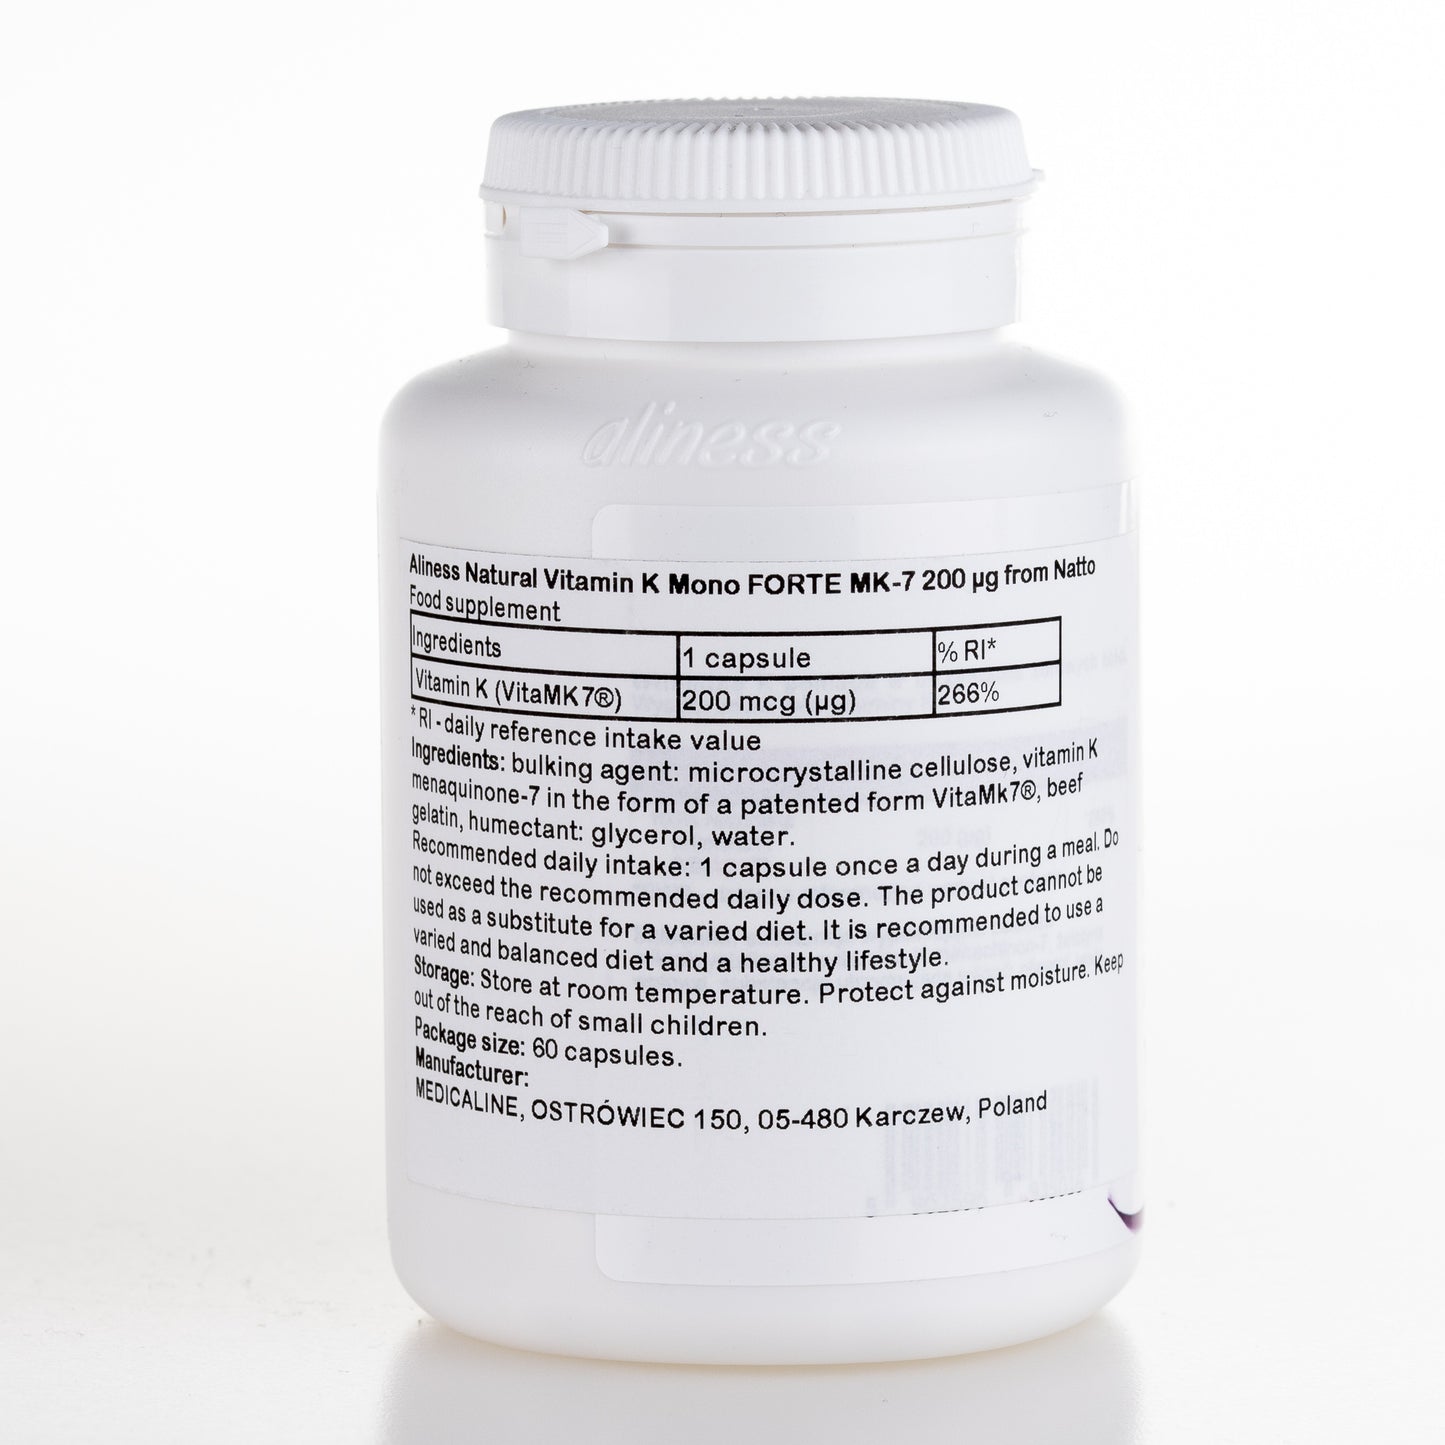 Vitamin K2 MK-7 FORTE 200mcg (200μg) from Natto, 60 capsules, 2 months supply